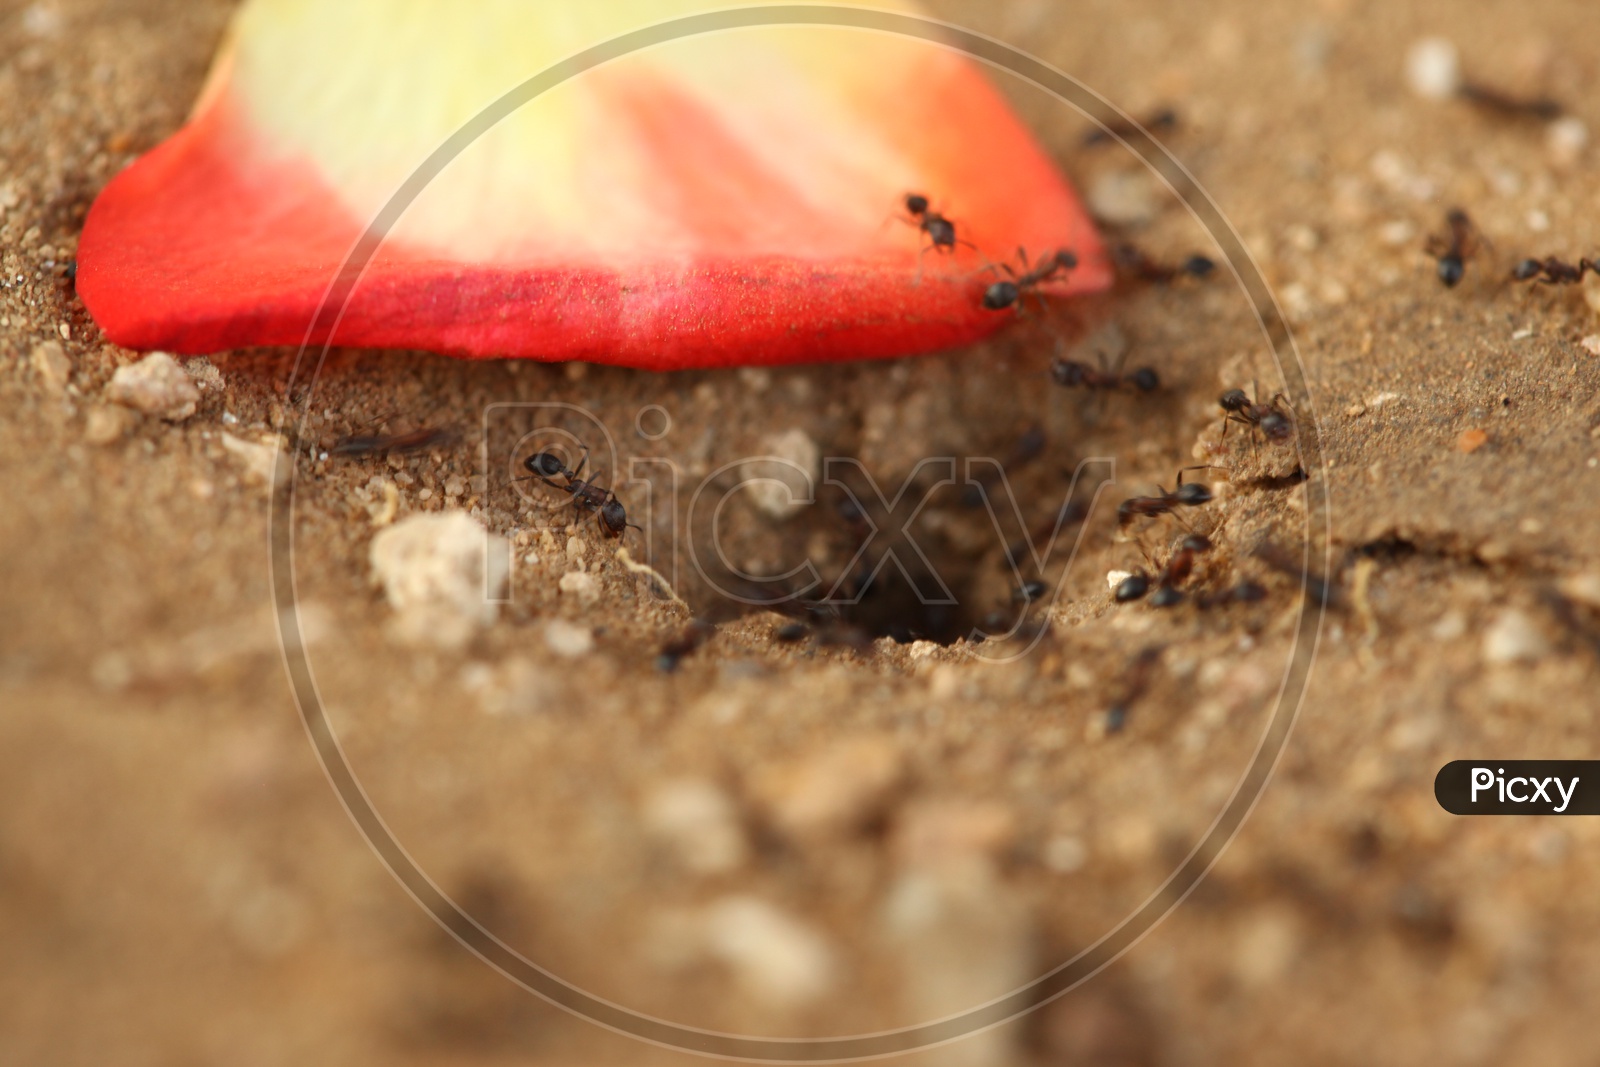 Black carpenter ants on the ground